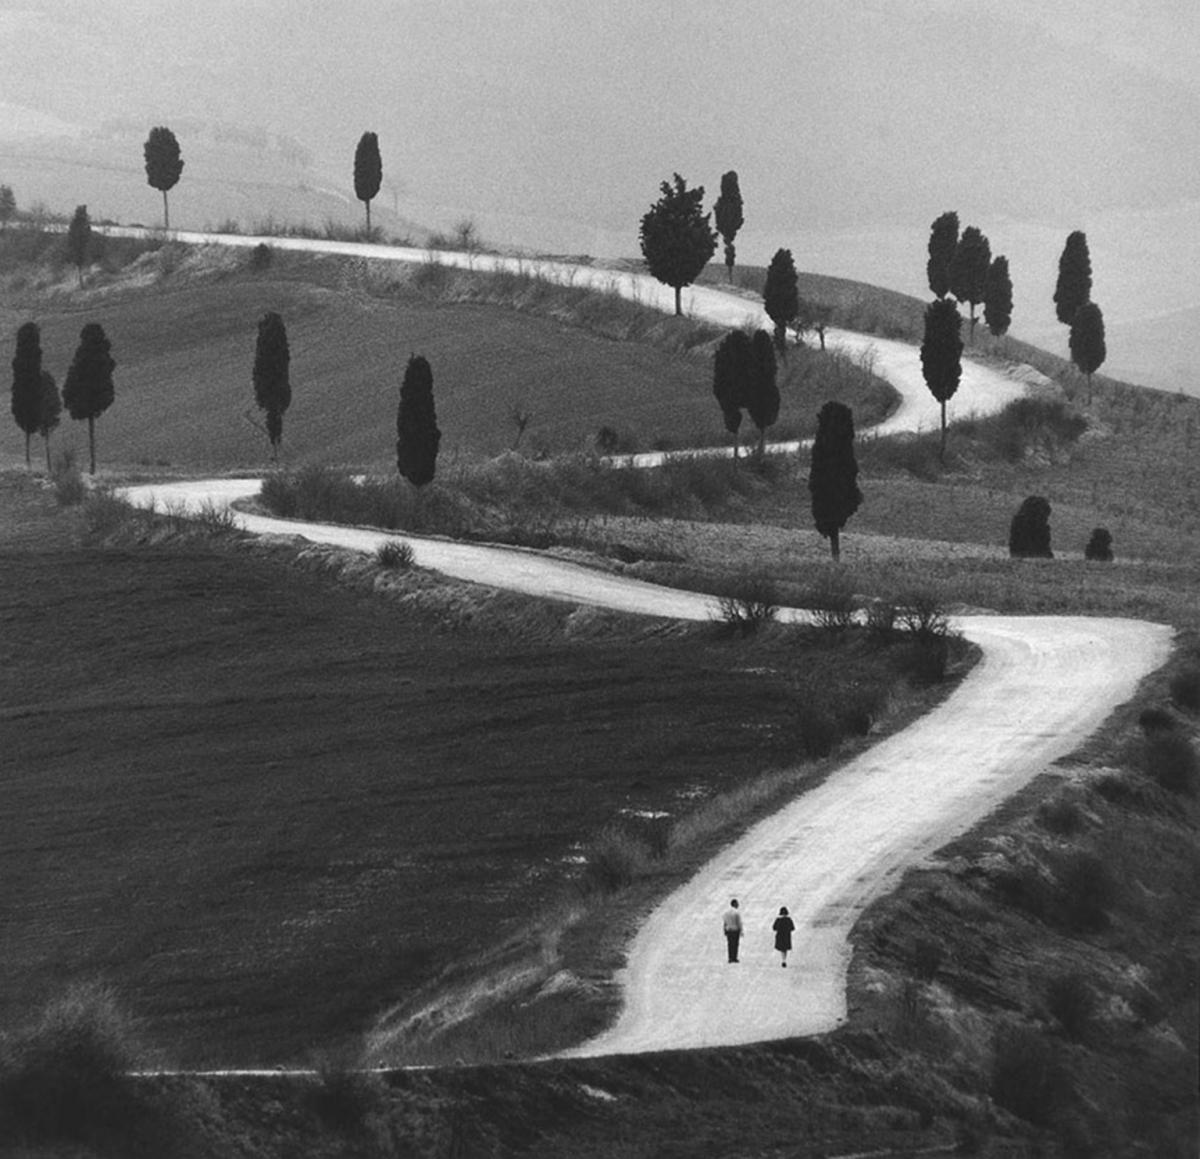 Berengo Gardin's Toscana, 1965